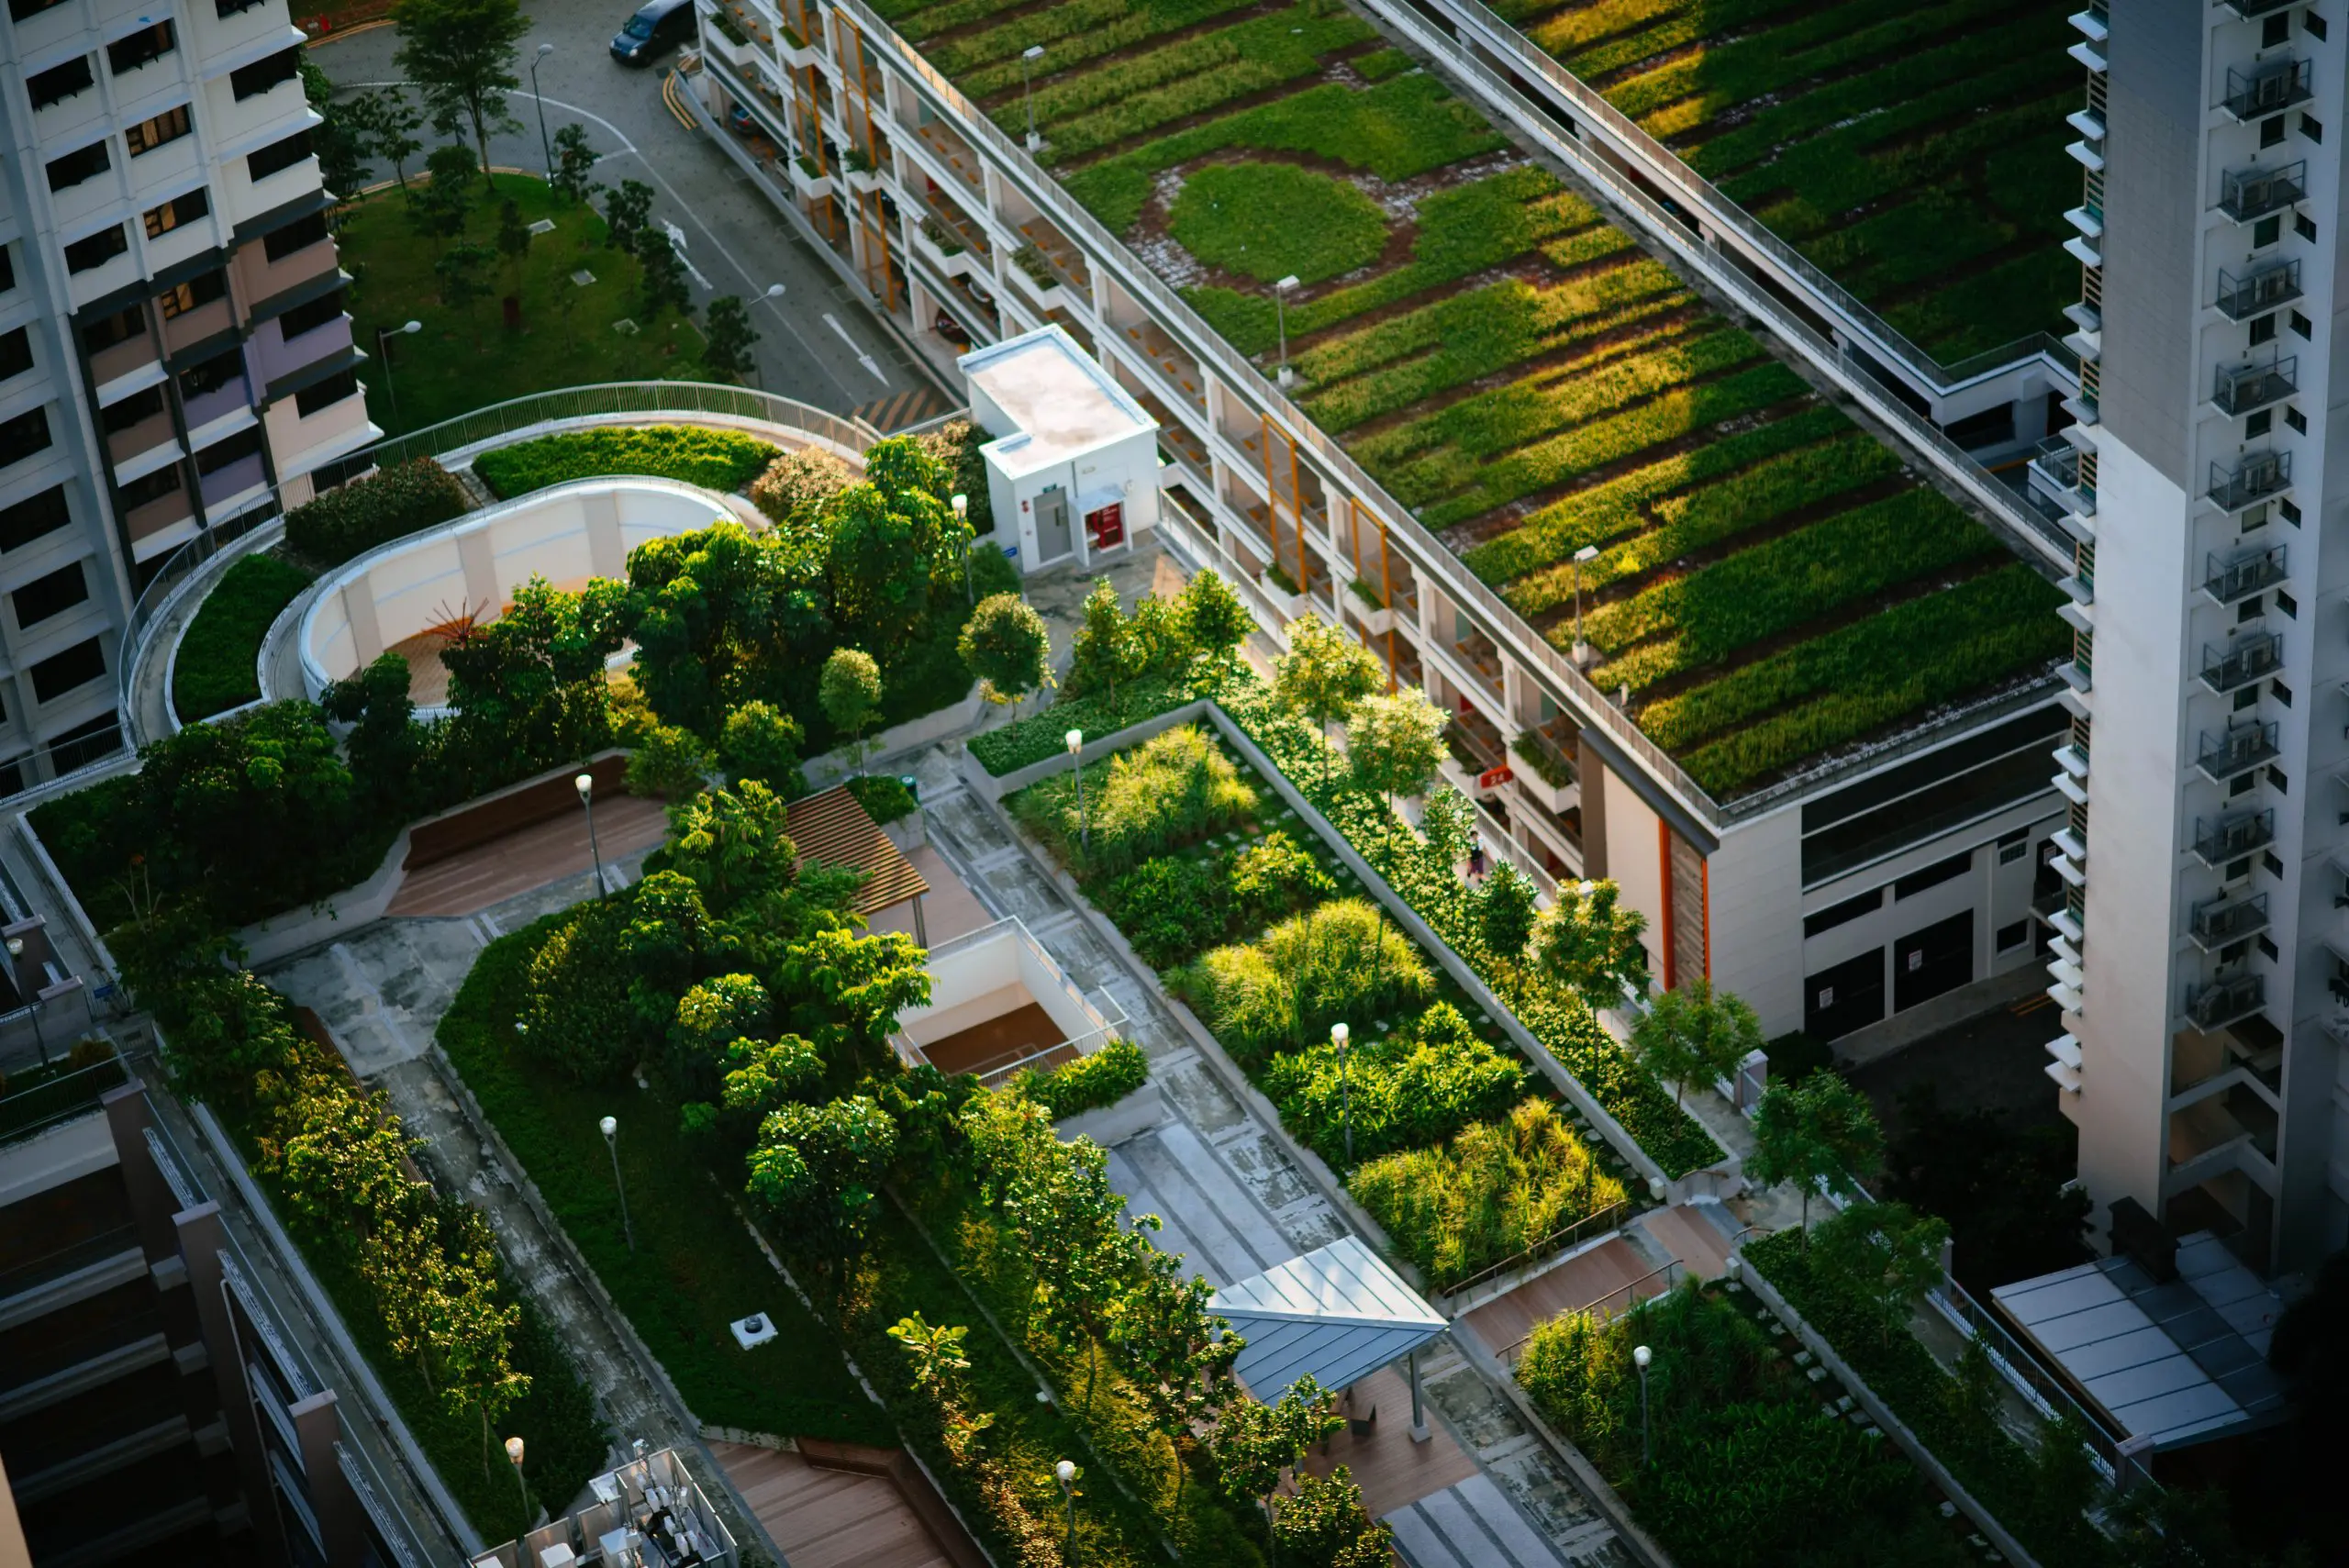 Movimento cidade jardim promove qualidade urbana - eCycle